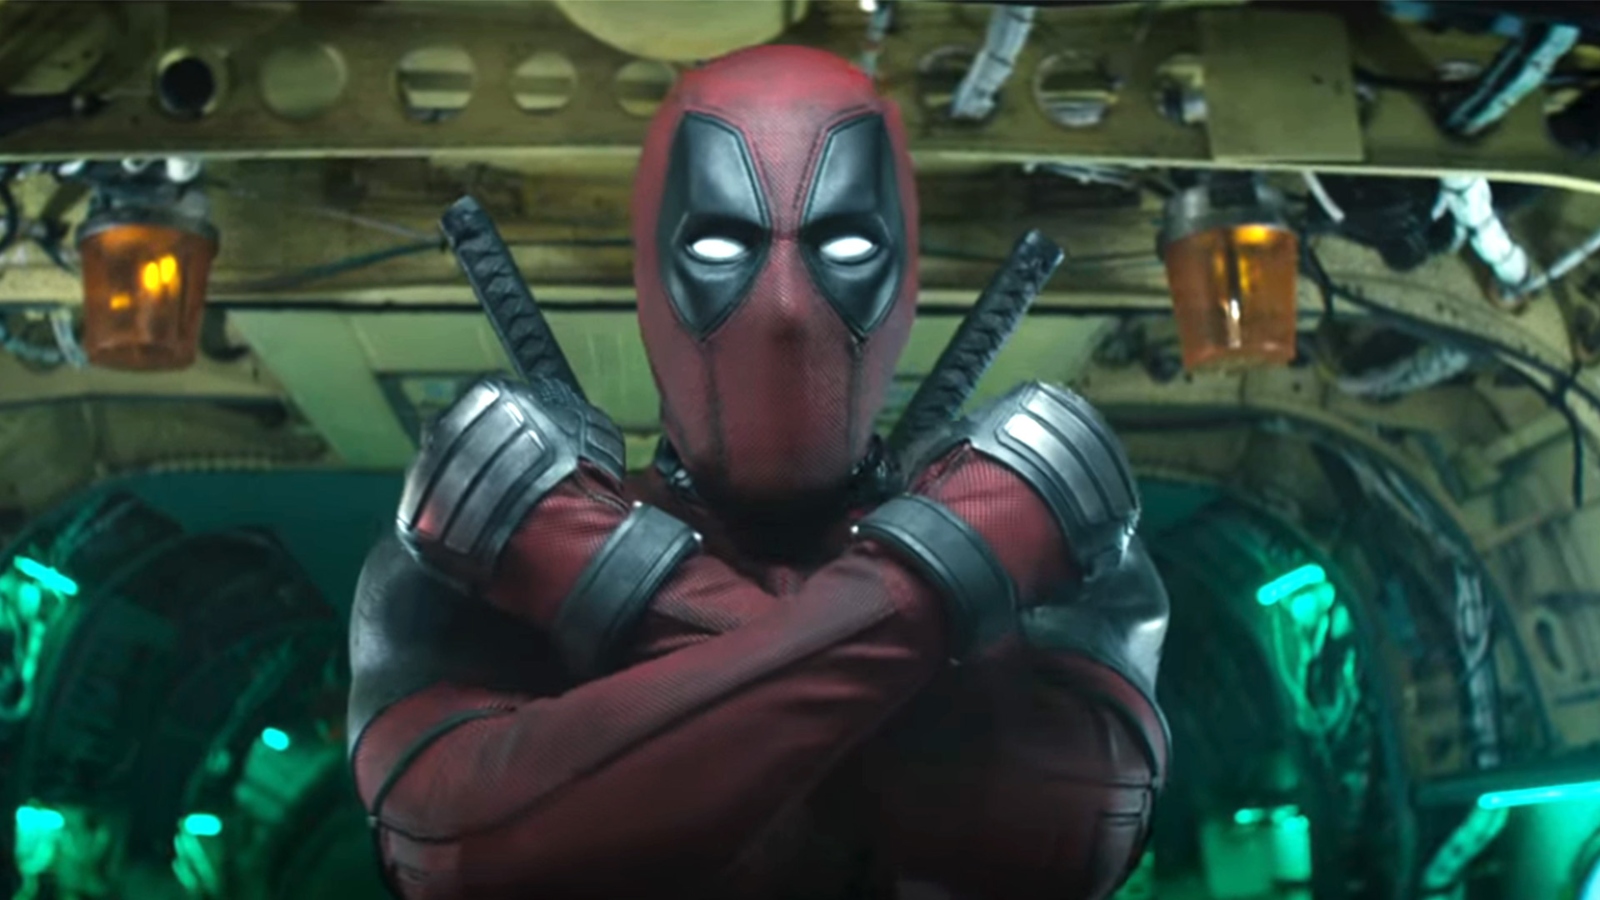 Deadpool 3 - Trailer, News, Story, Every Update